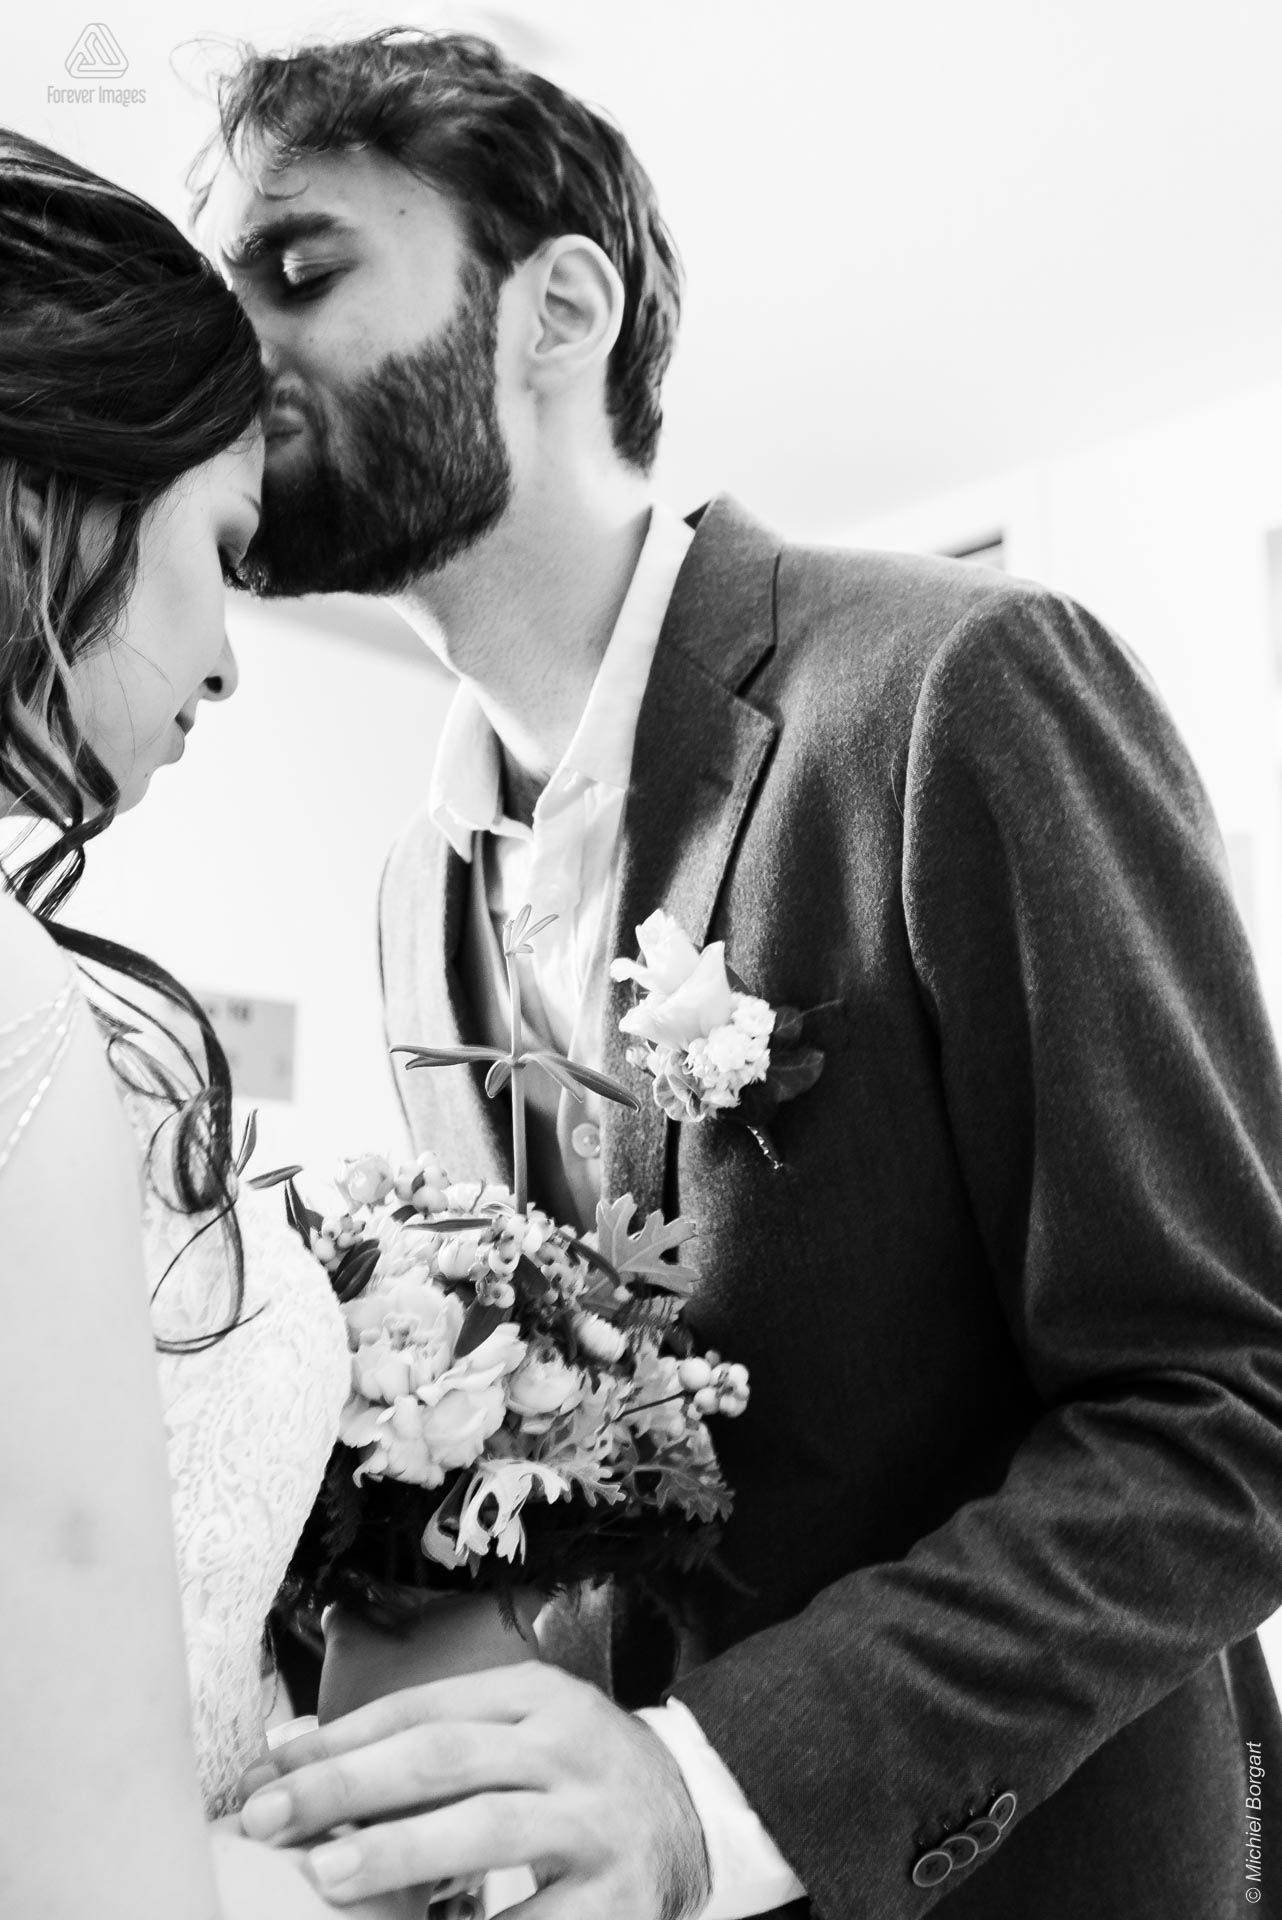 Wedding photo black and white B&W emotional meeting wedding couple | Wedding Photographer Michiel Borgart - Forever Images.